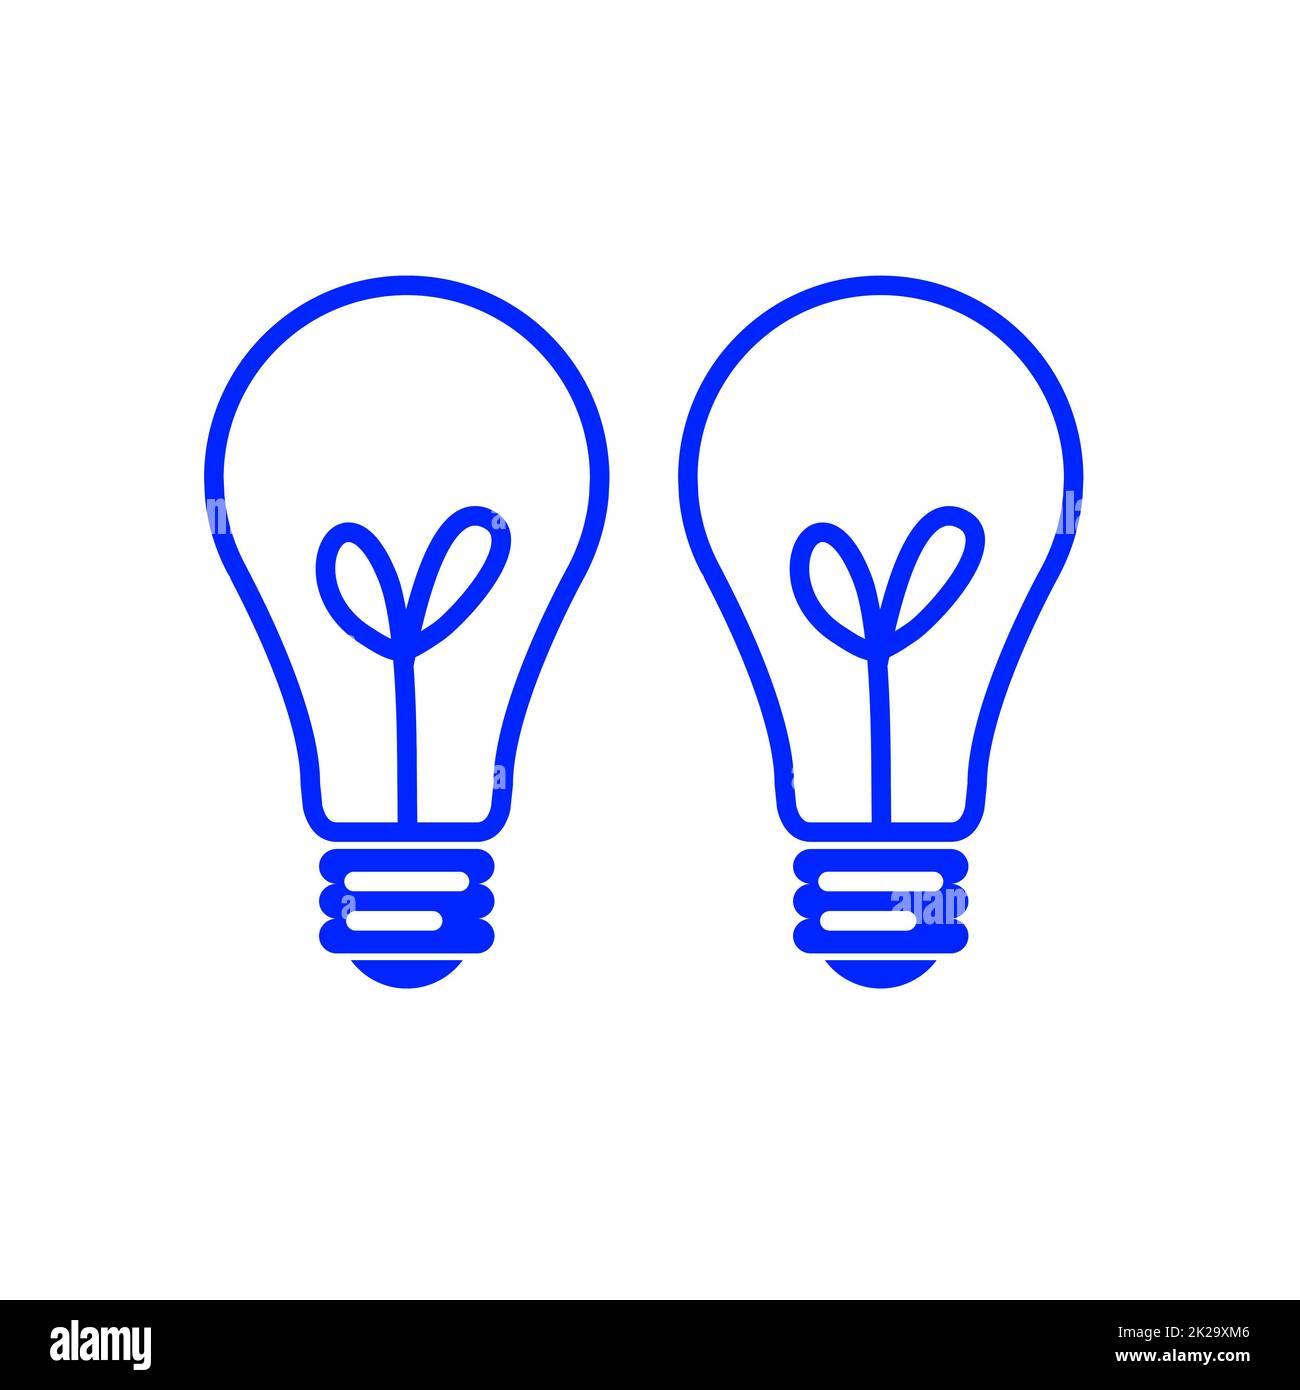 a bulb illustration - a symbol icon Stock Photo